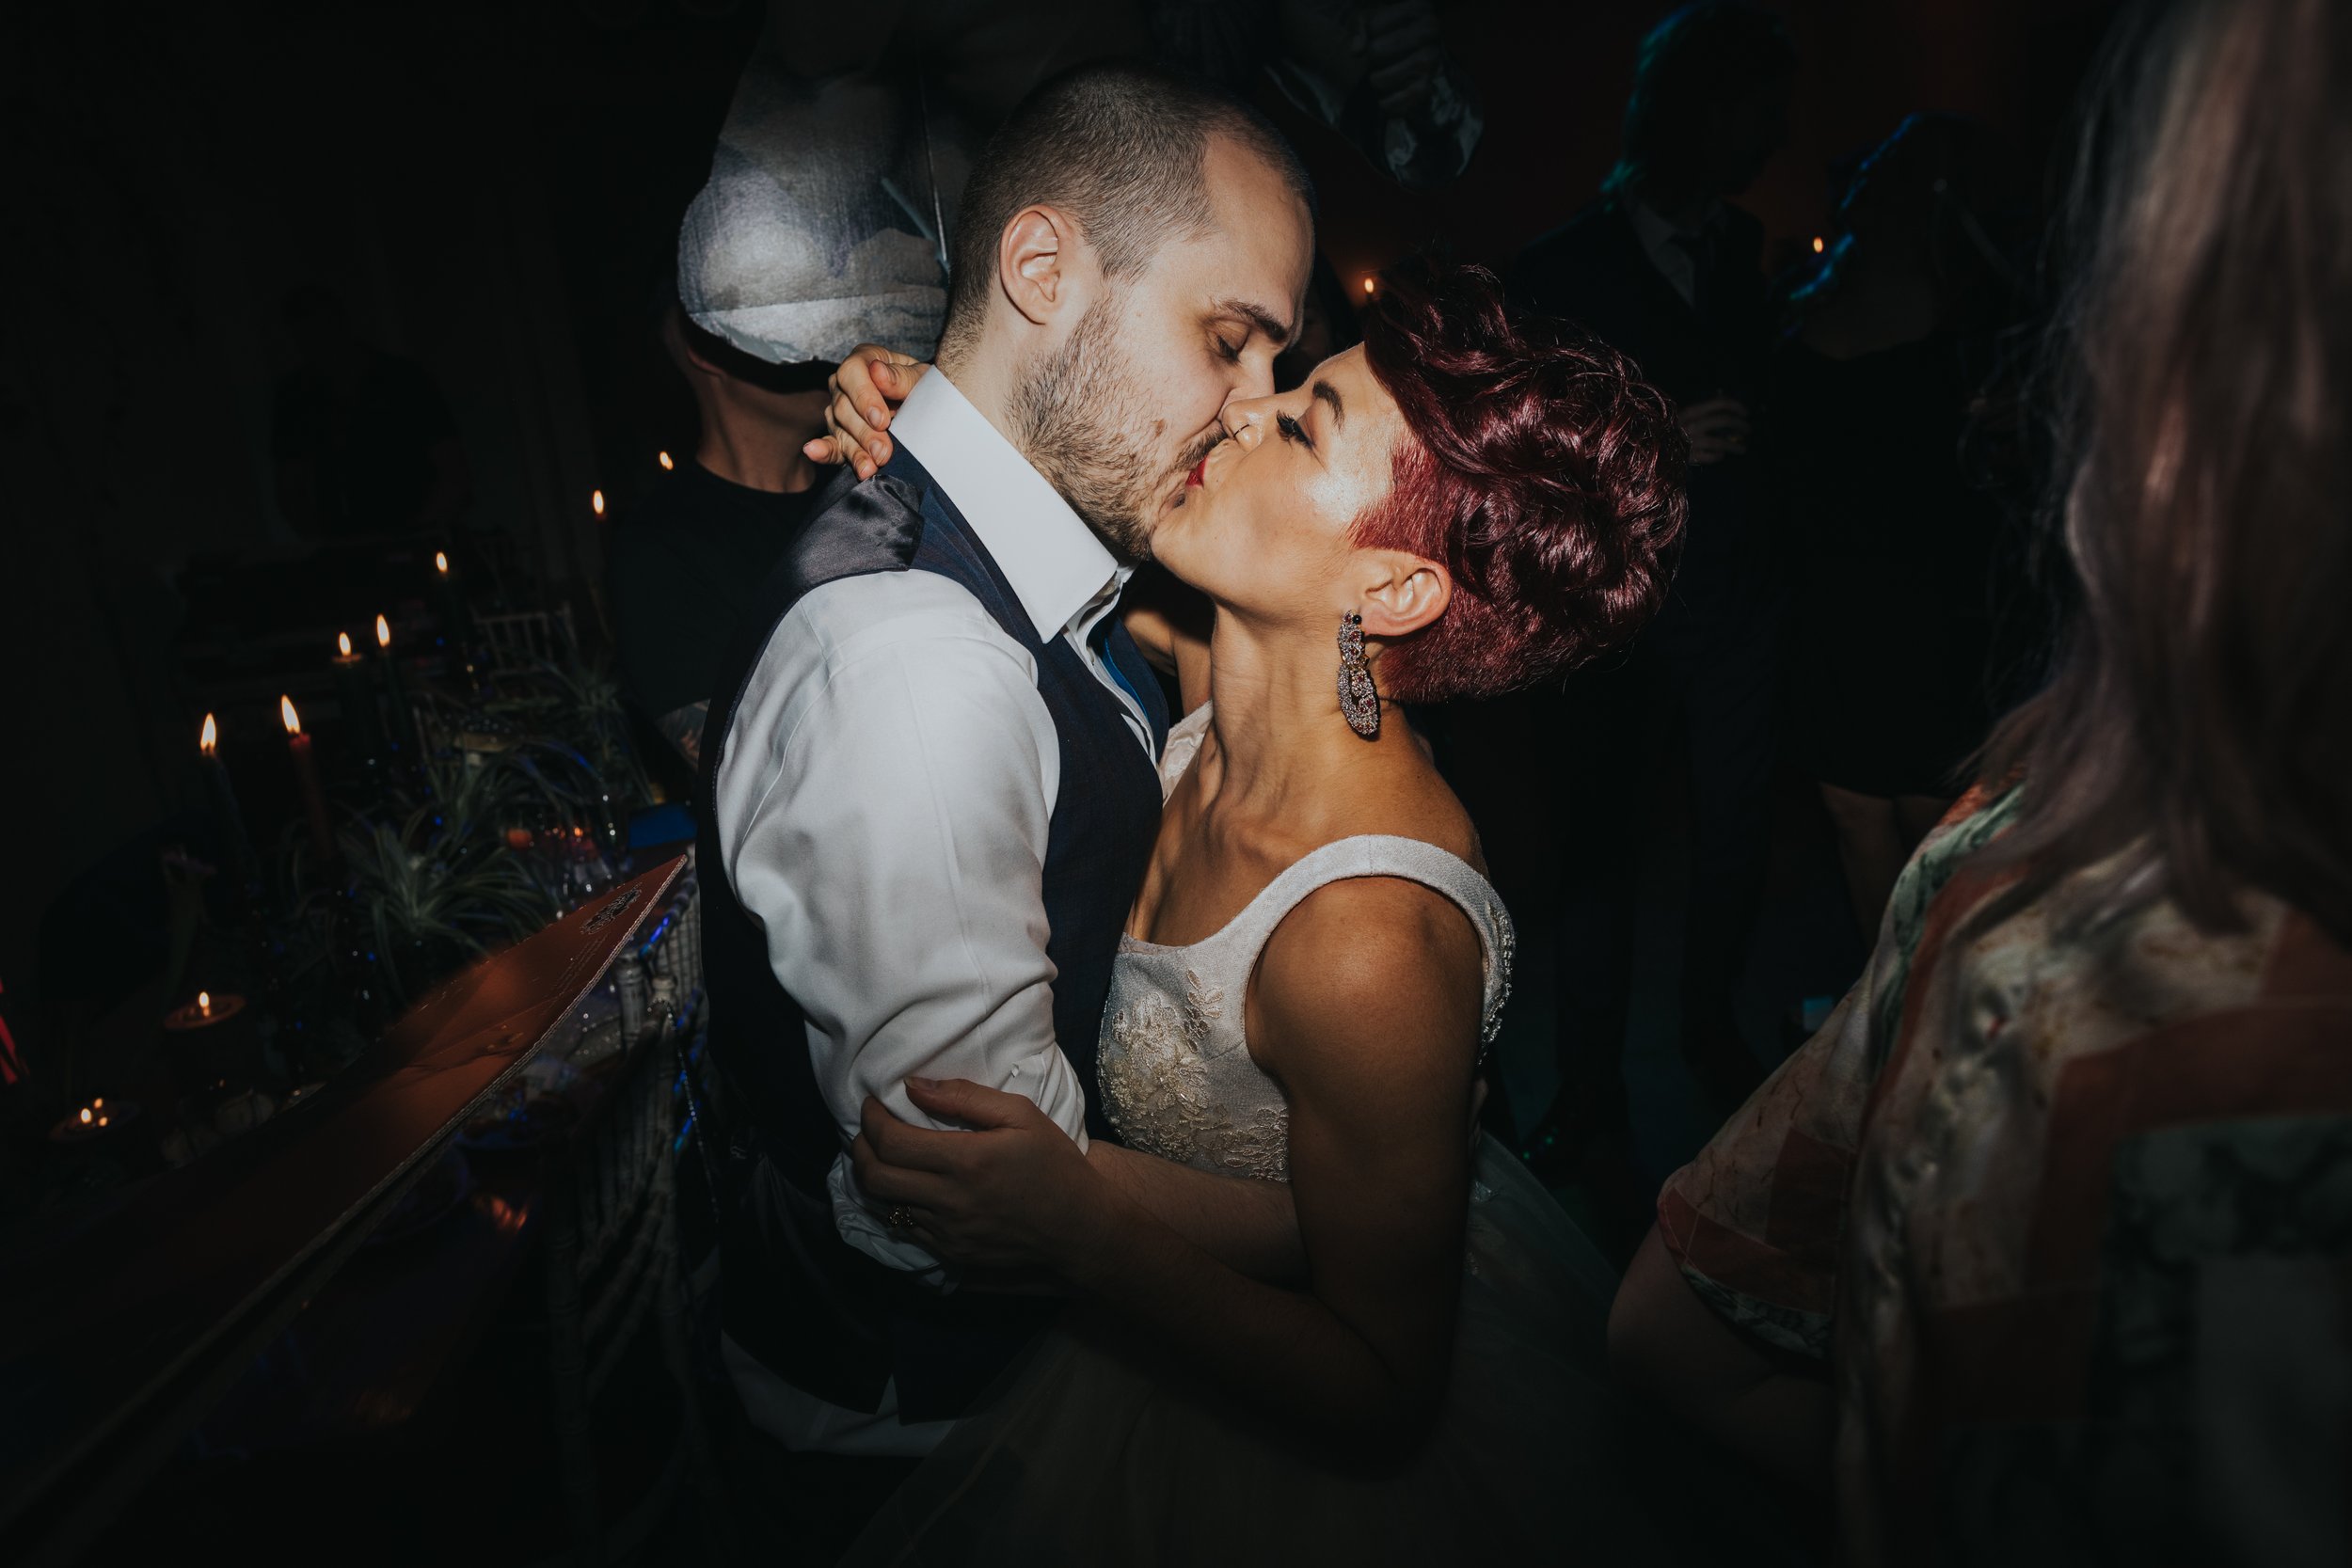 Bride and groom kiss on the dance floor. 